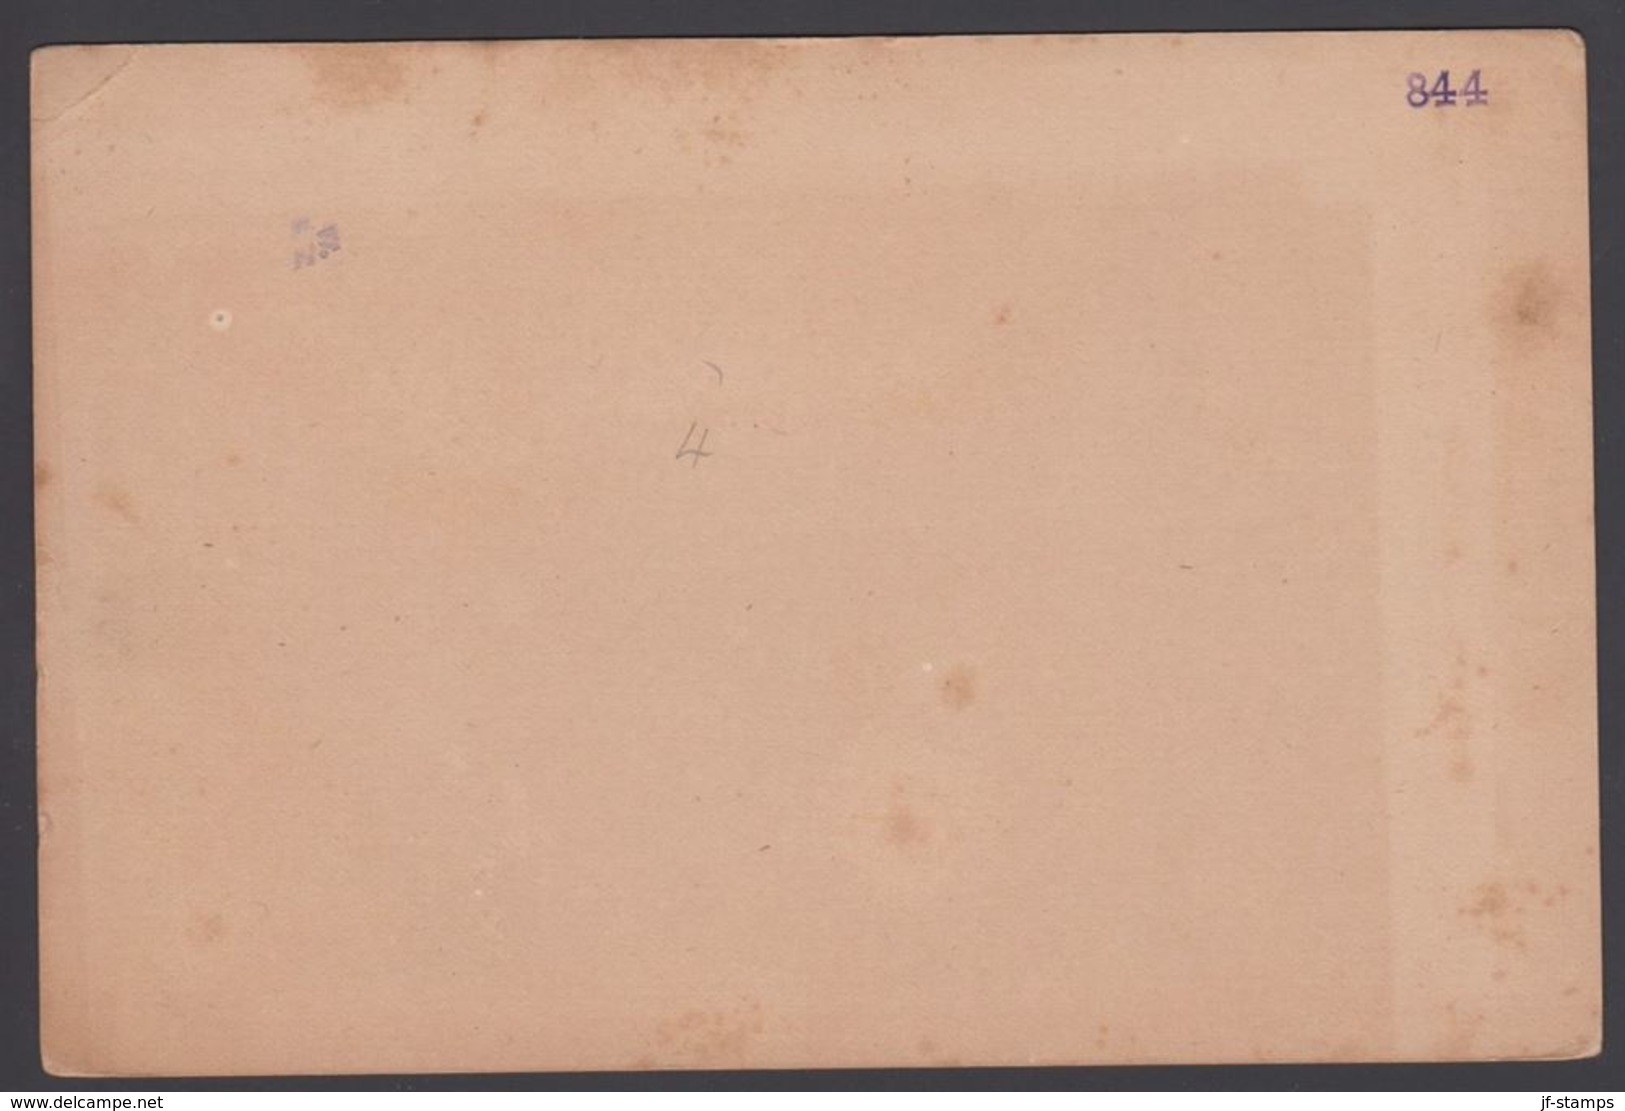 1880. QUEENSLAND AUSTRALIA  ONE PENNY POST CARD VICTORIA. () - JF304905 - Storia Postale